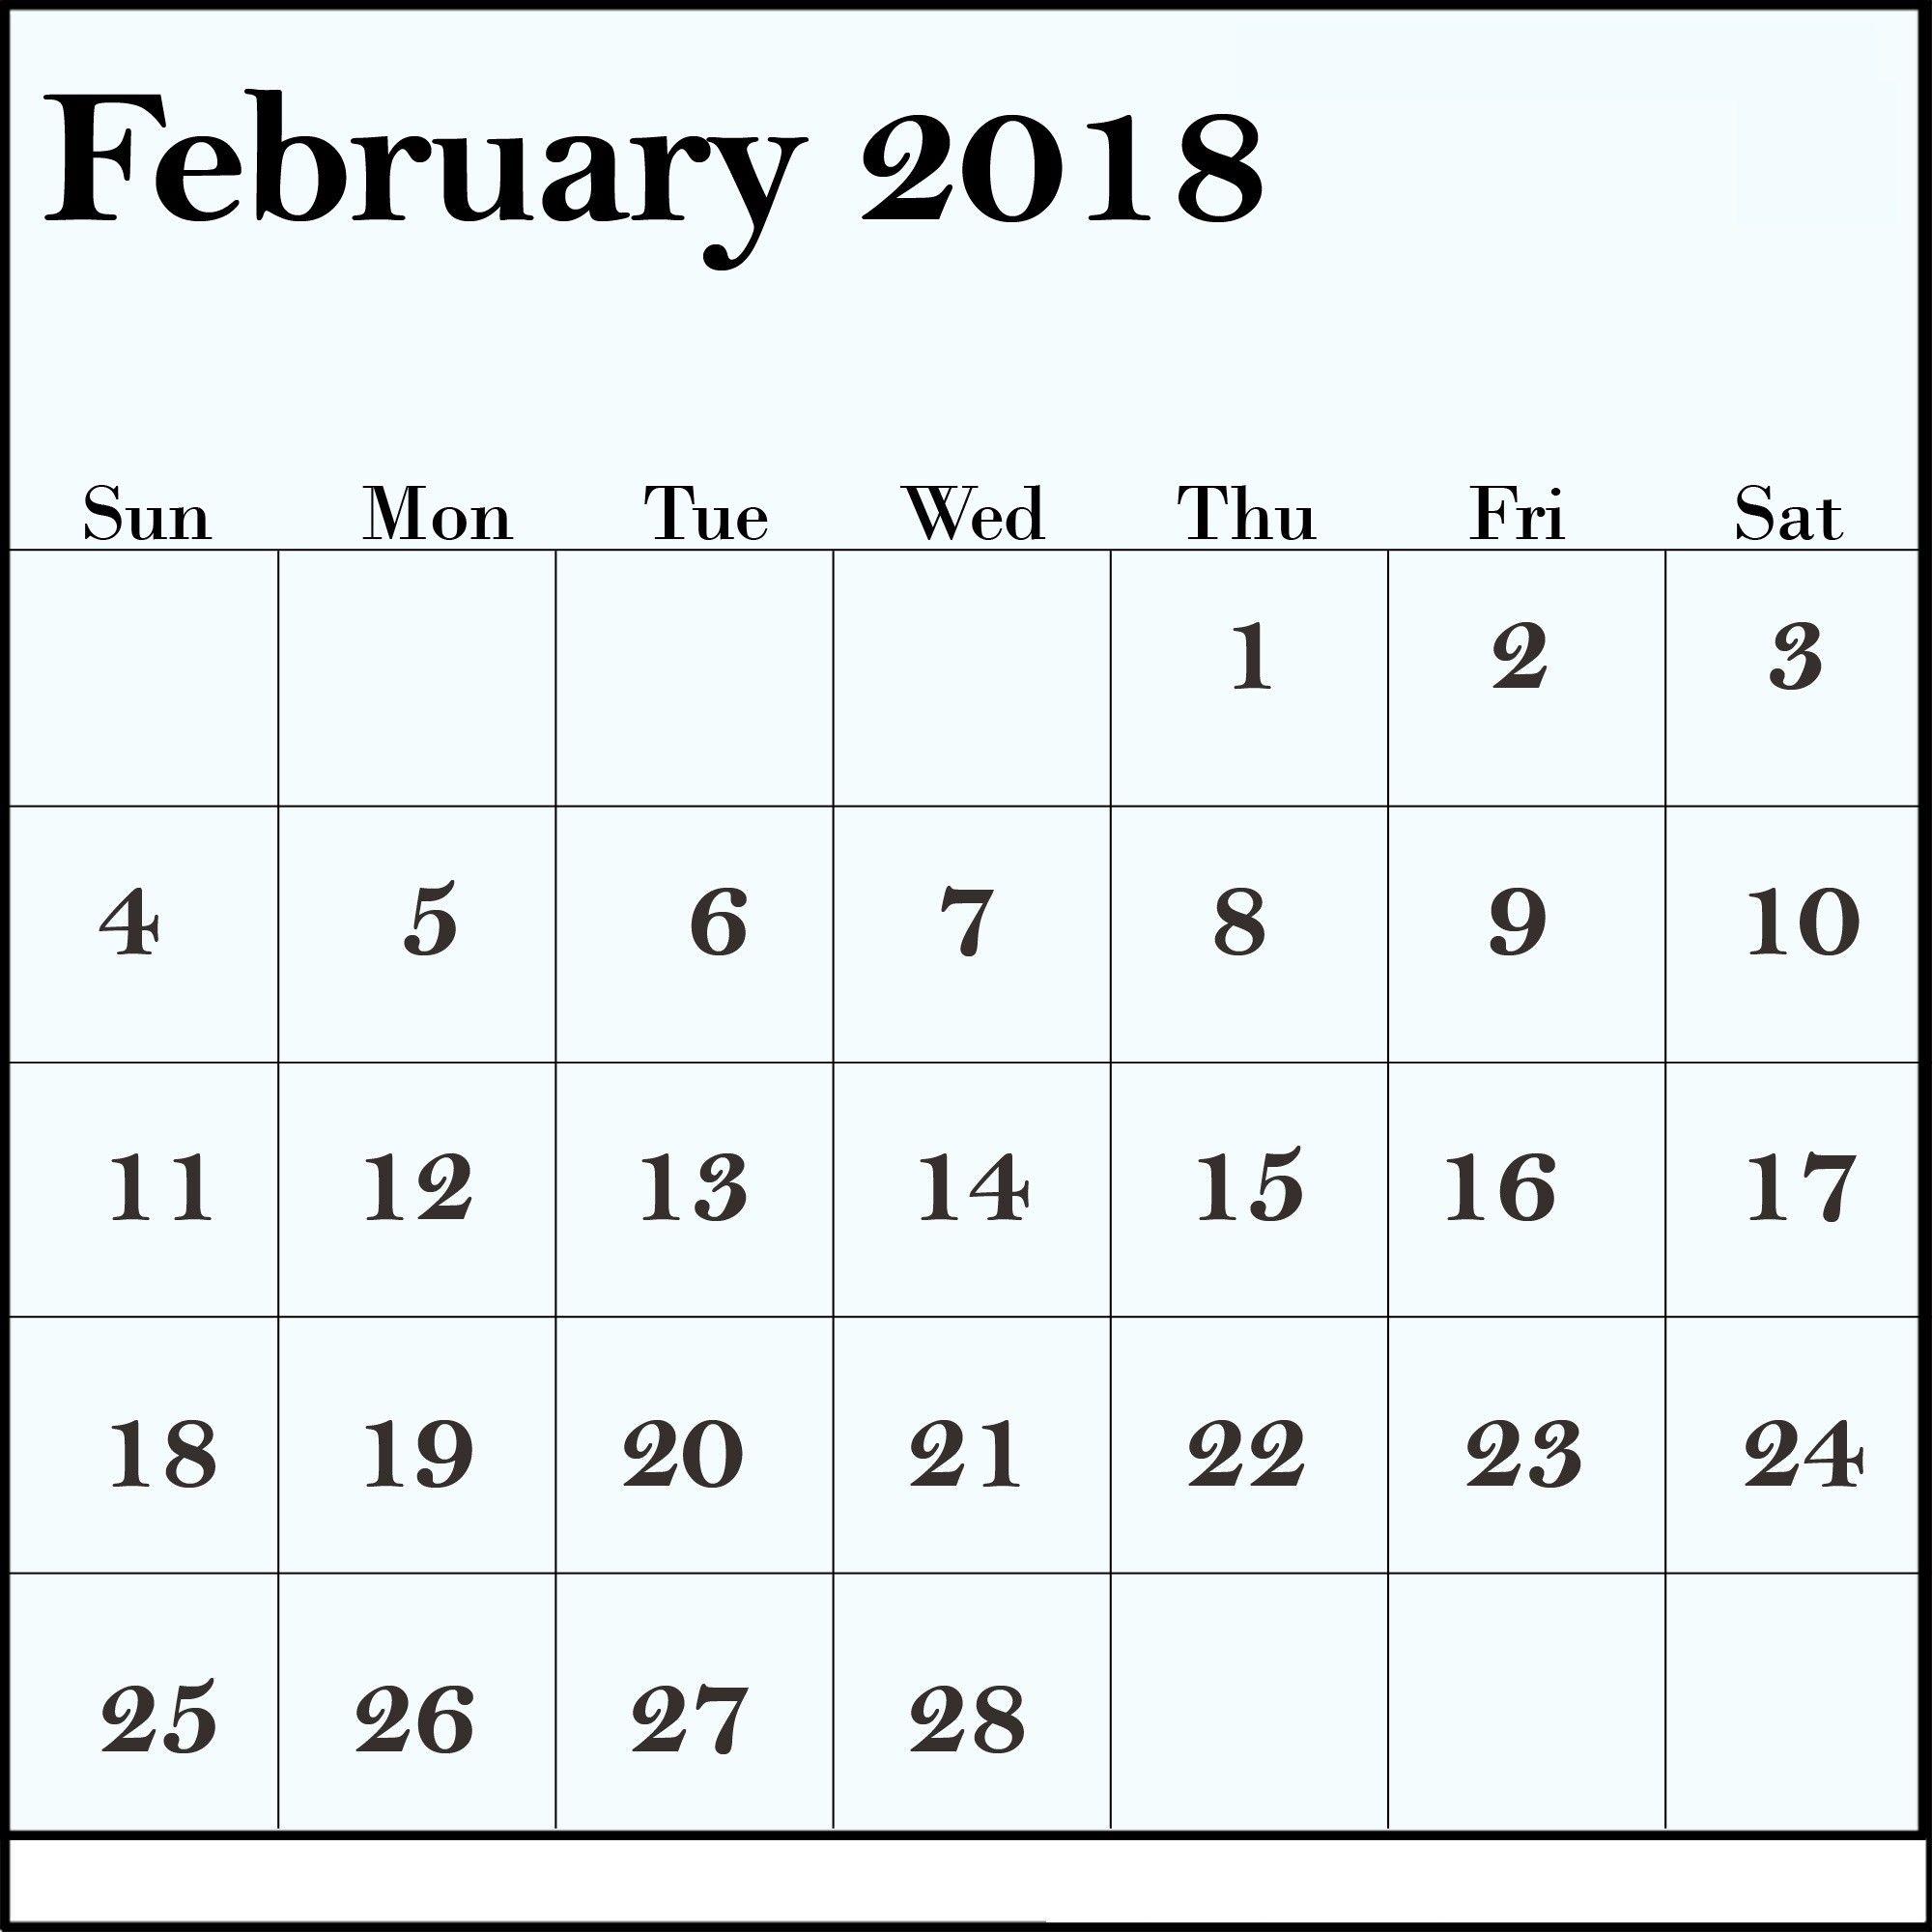 february-2018-calendar-wikidates